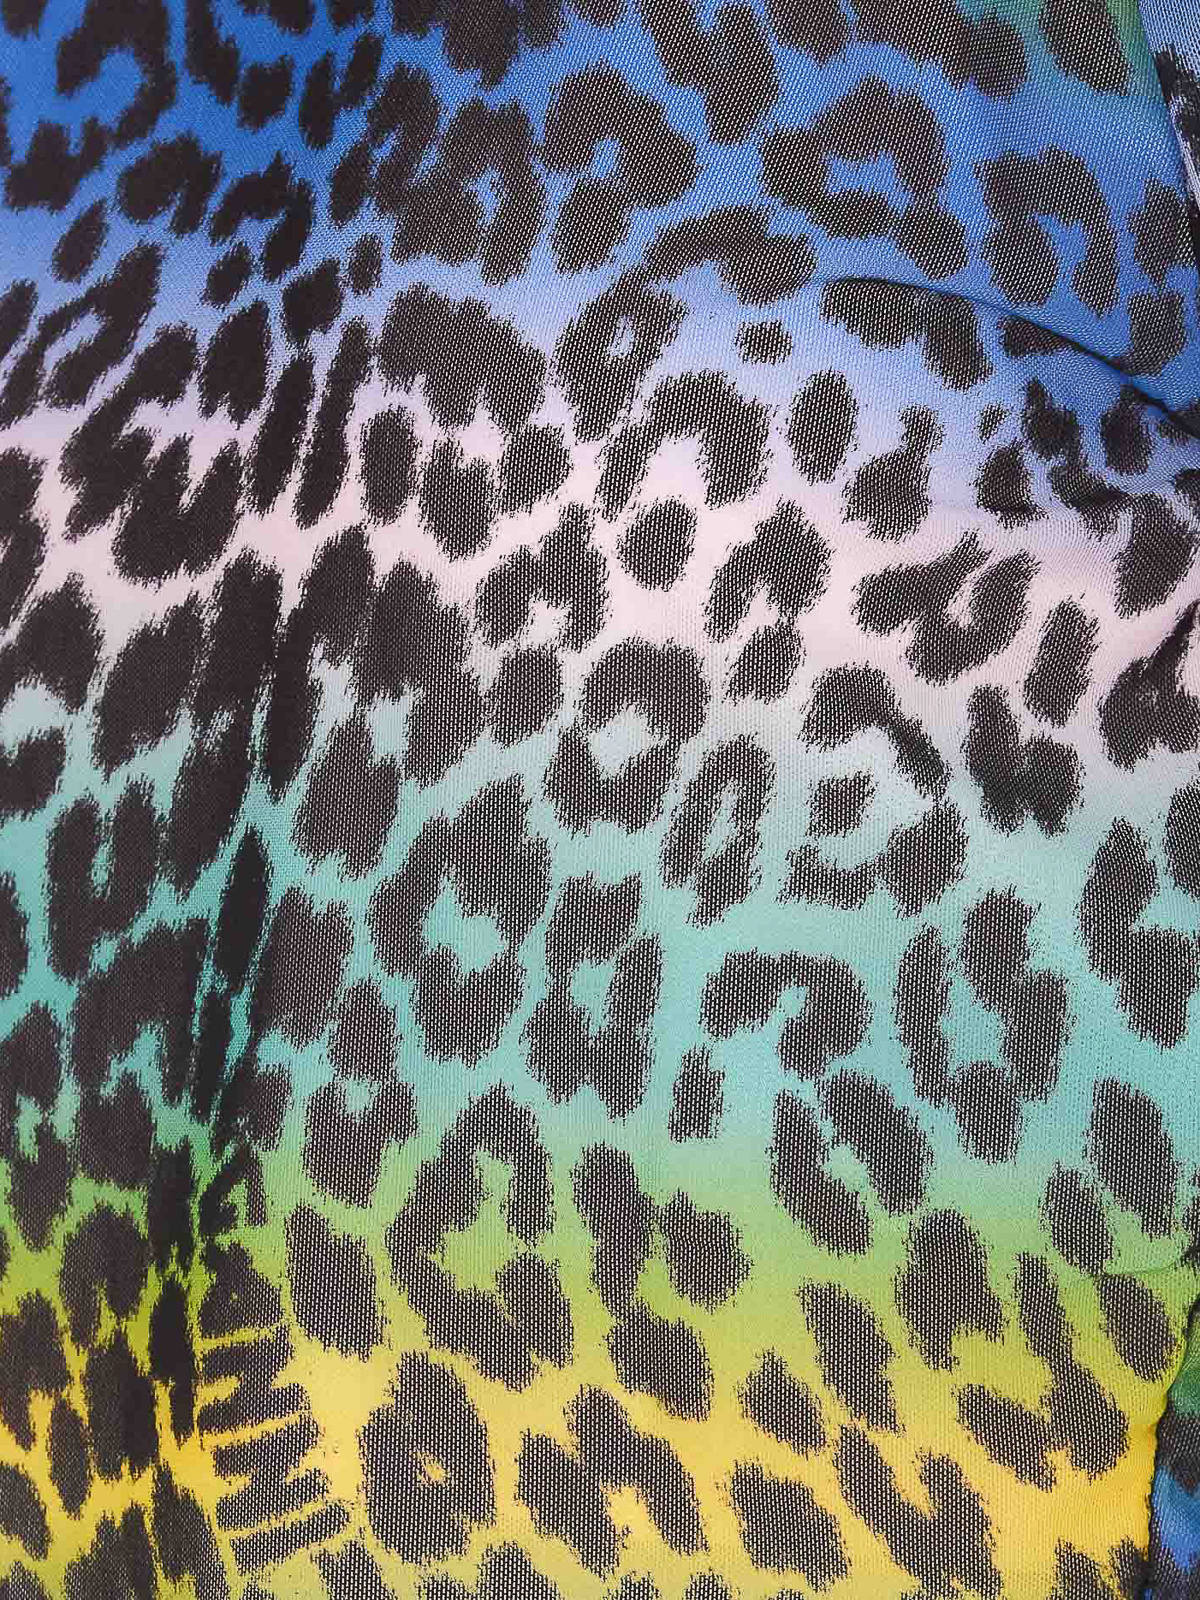 Shop Ganni Cropped Leopard T-shirt In Multicolour